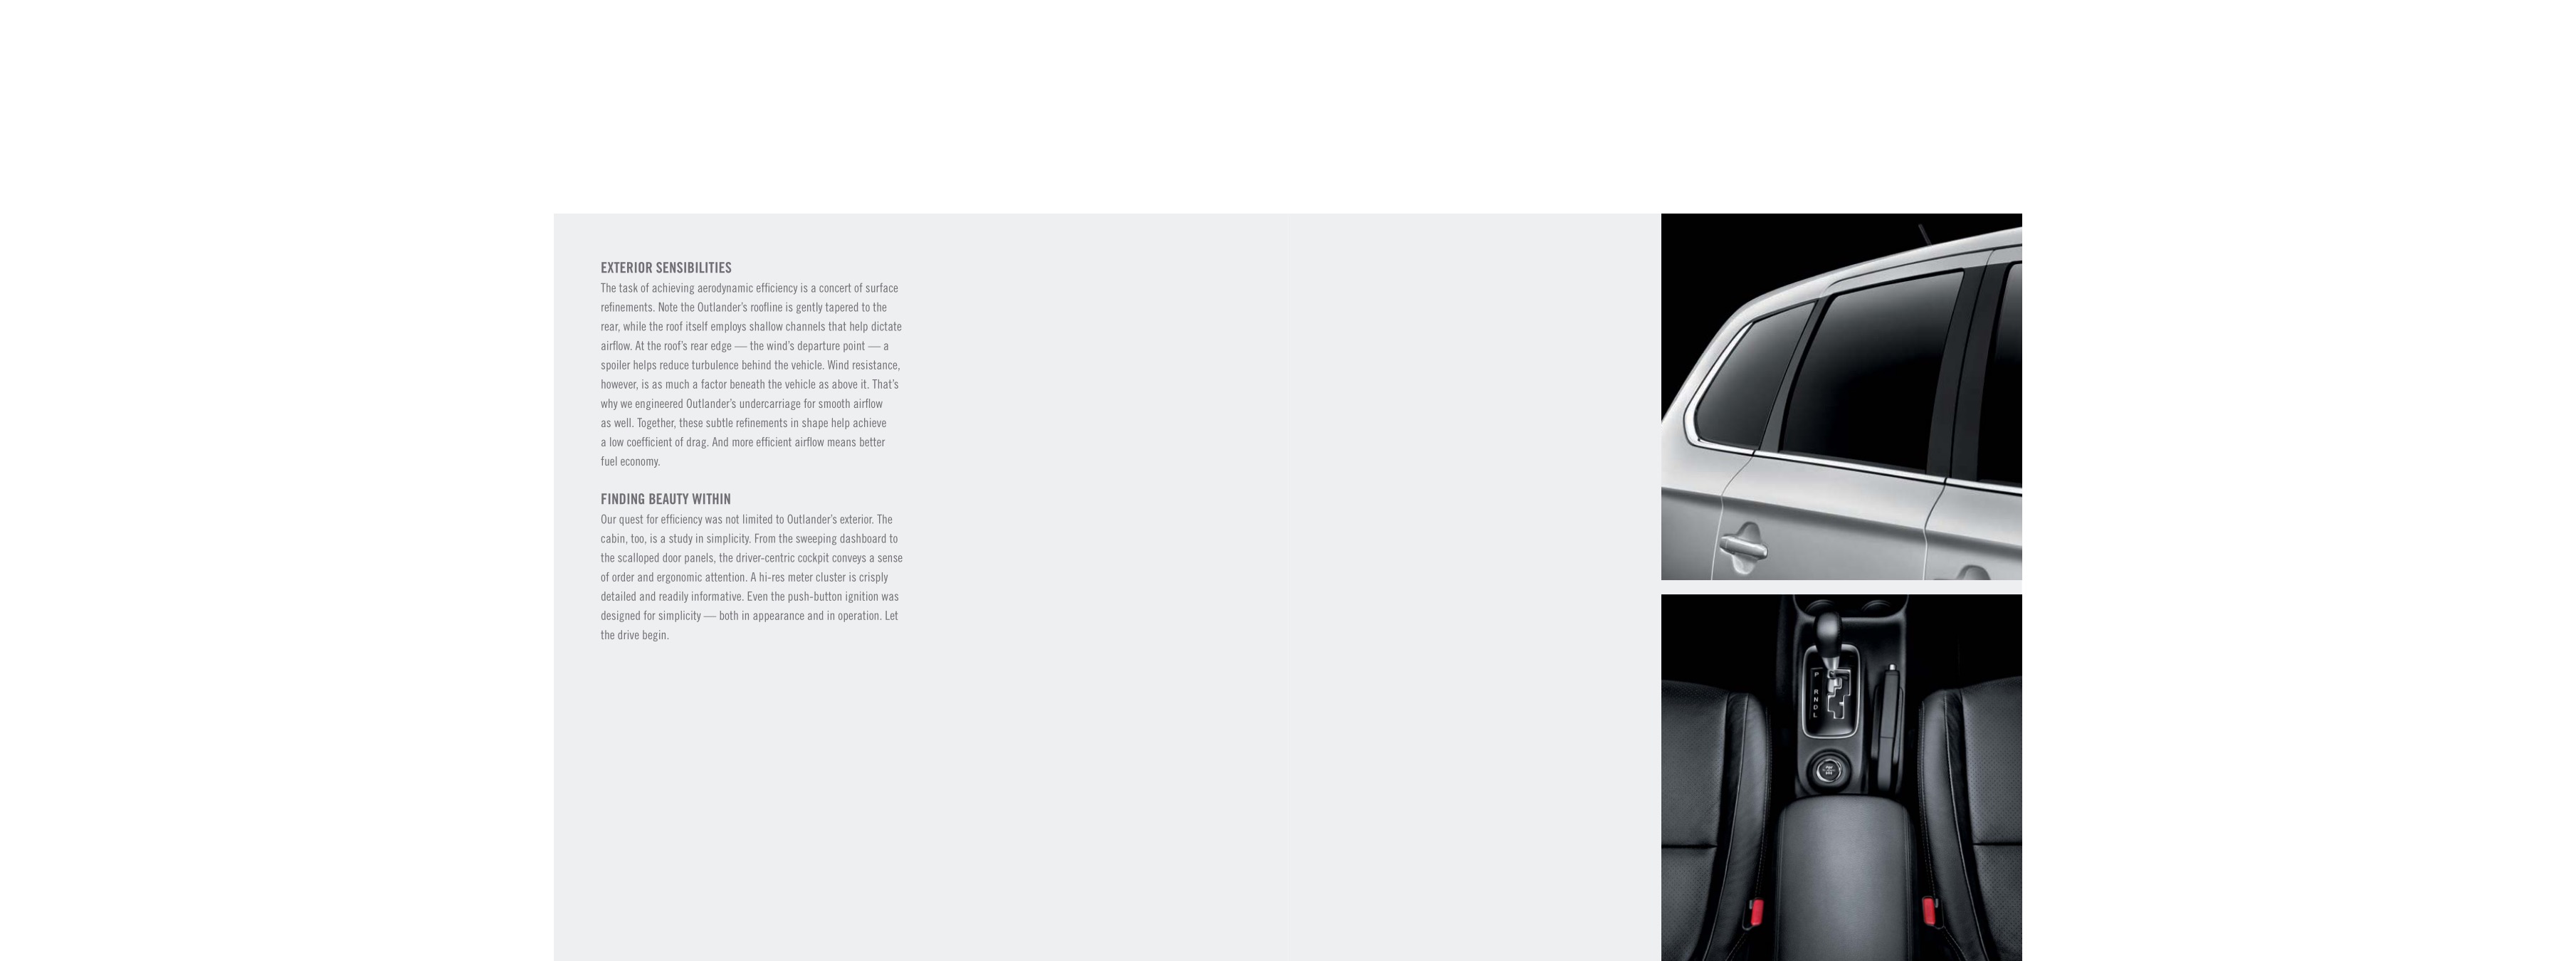 2014 Mitsubishi Outlander Brochure Page 2